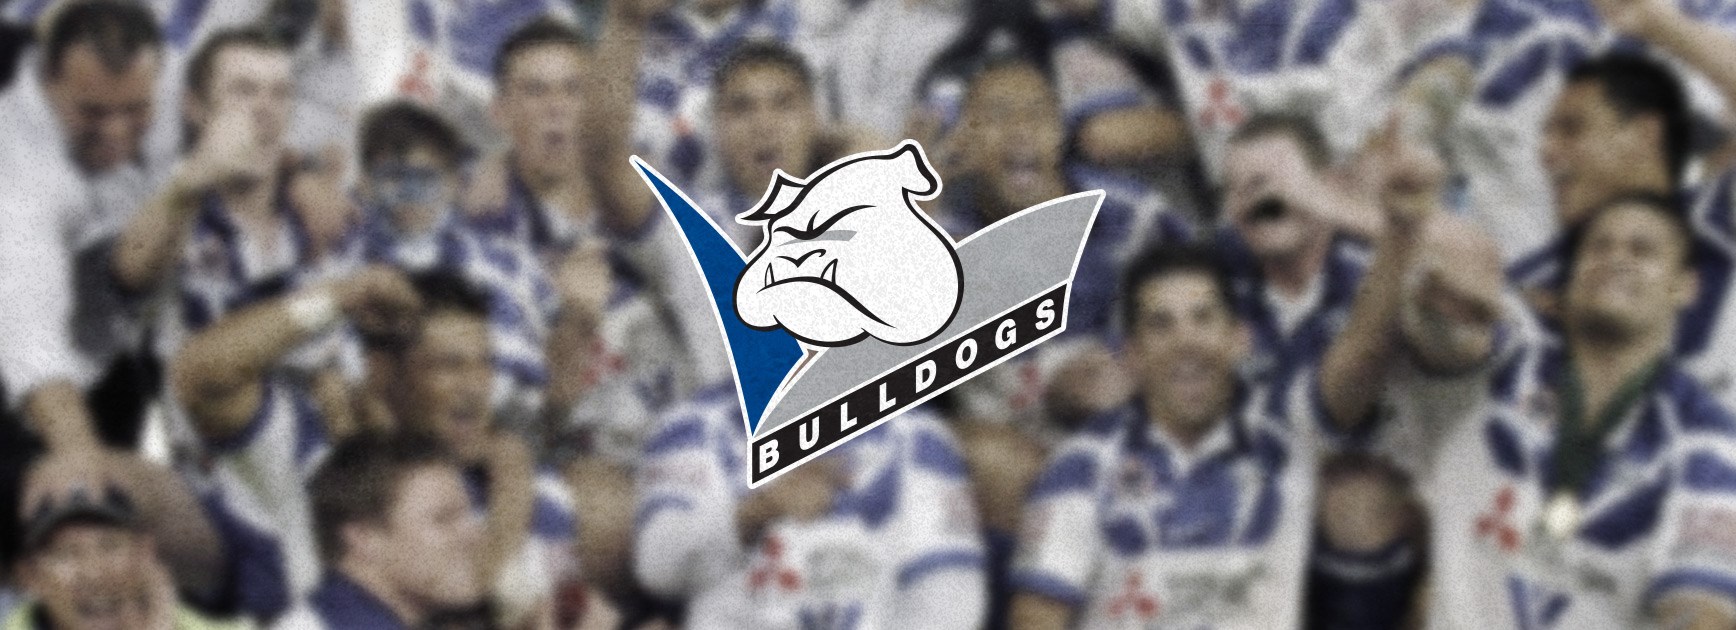 Evolution of the Bulldogs Logo: 1998-2009 - Bulldogs